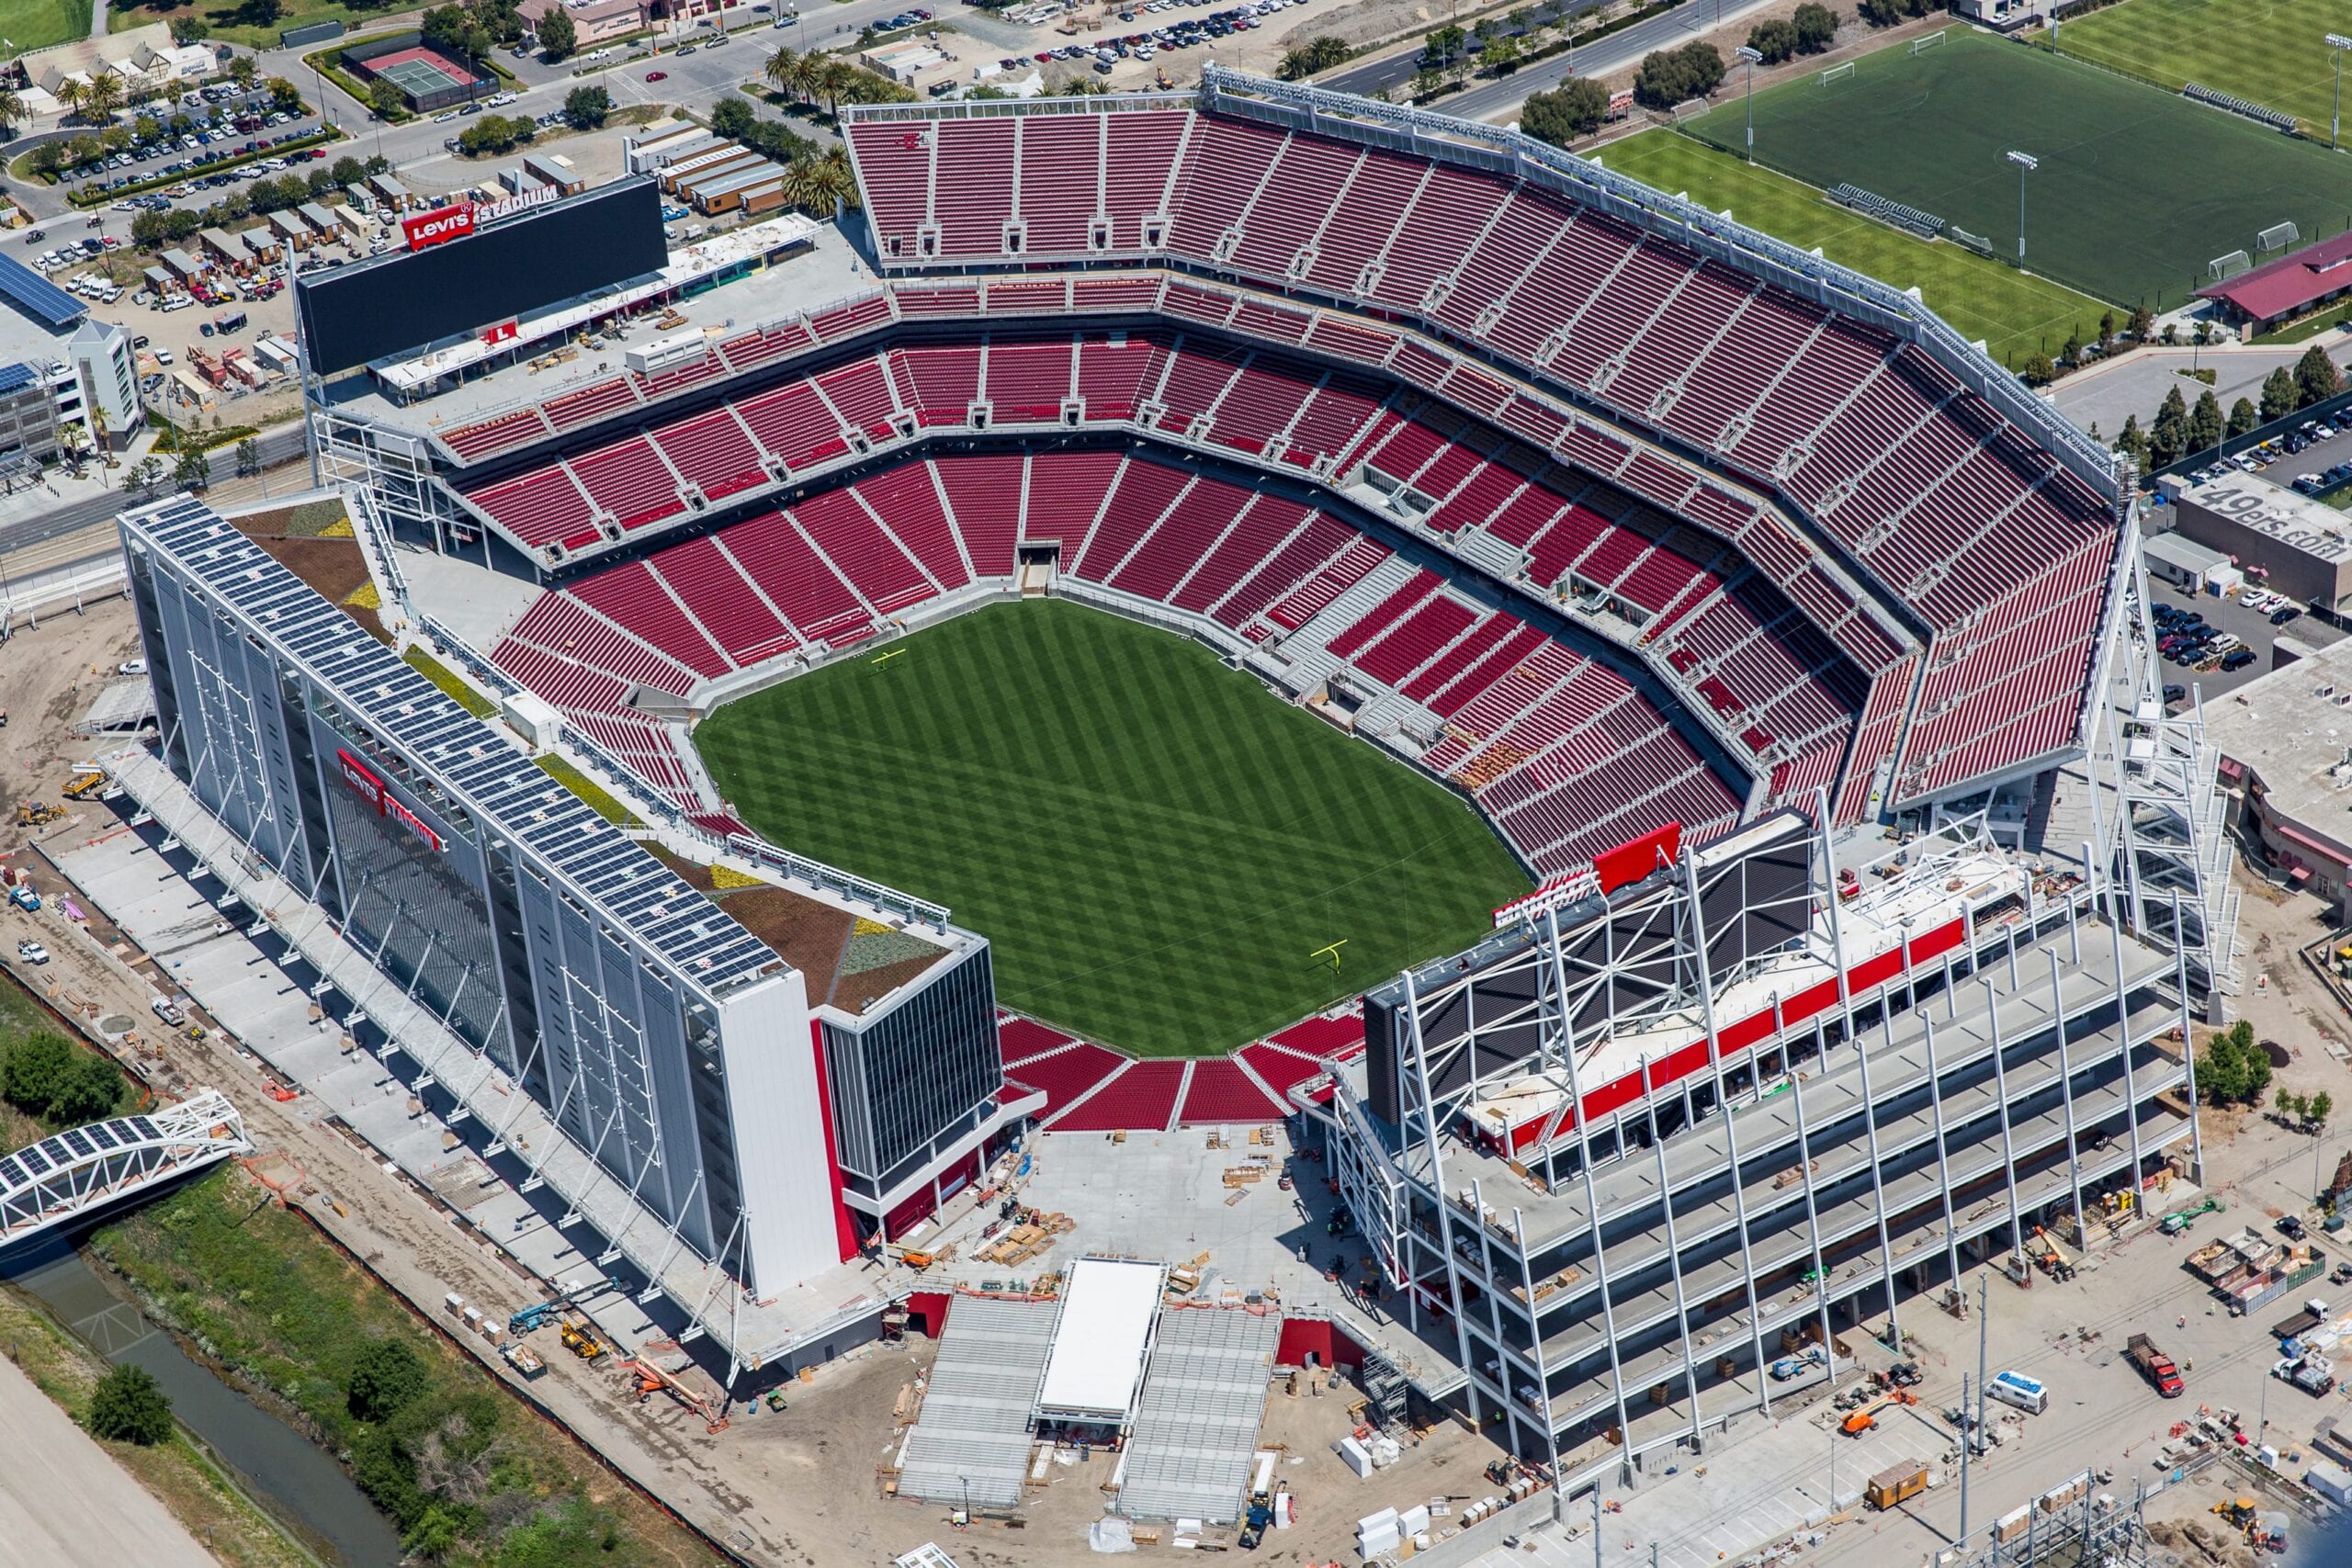 49ers football stadium